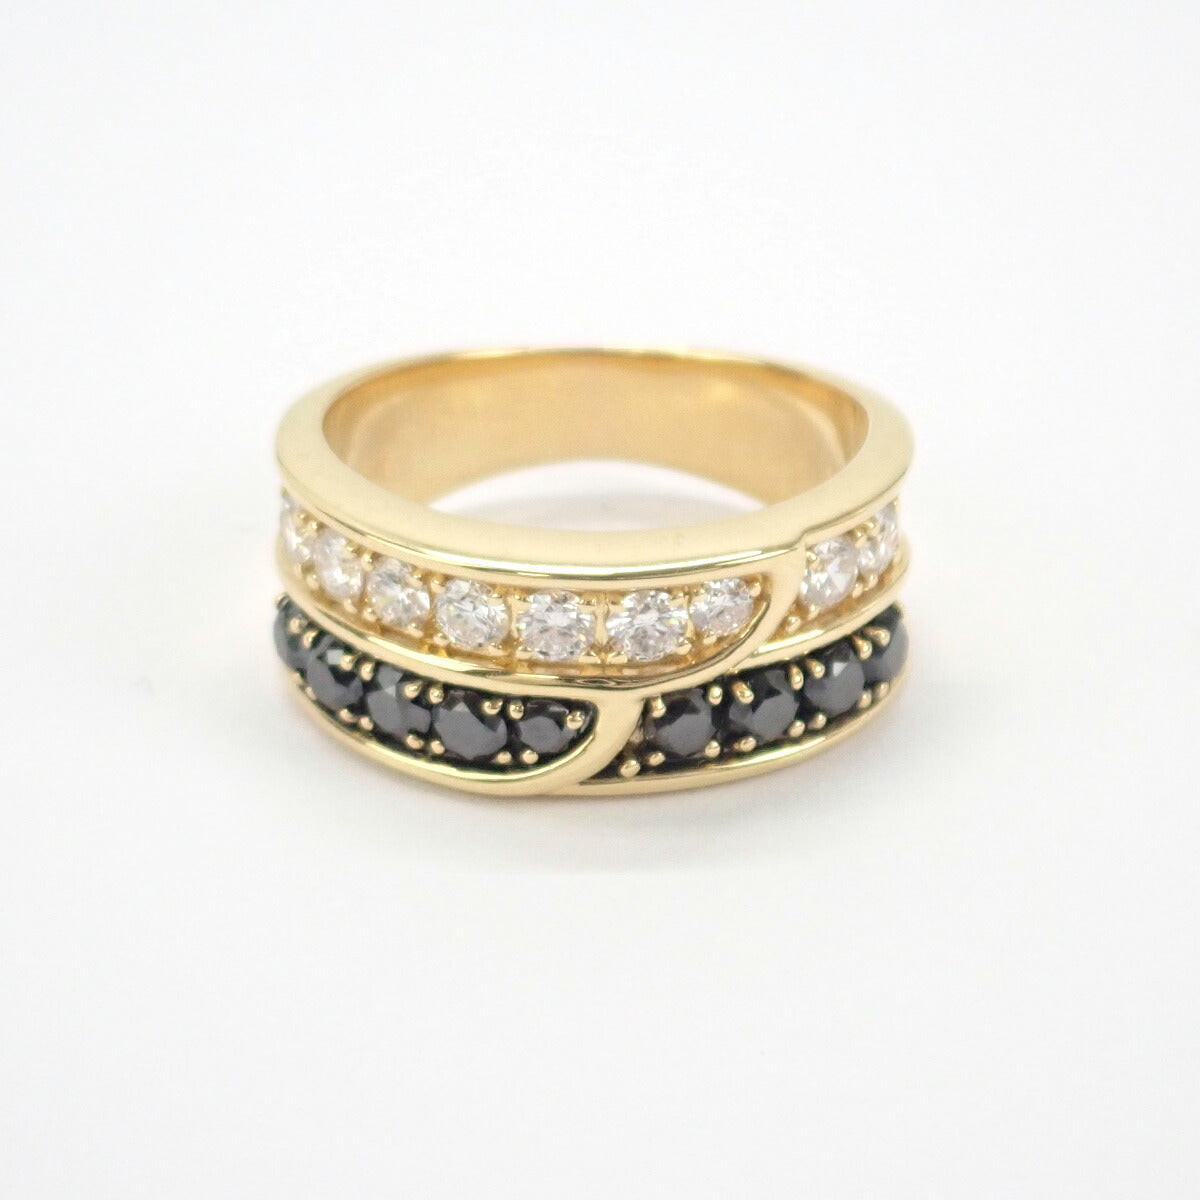 K18YG Diamond Ring with Black Diamond 0.49ct & Diamond 0.71ct, Size 11, Yellow Gold, Ladies (Pre-owned)